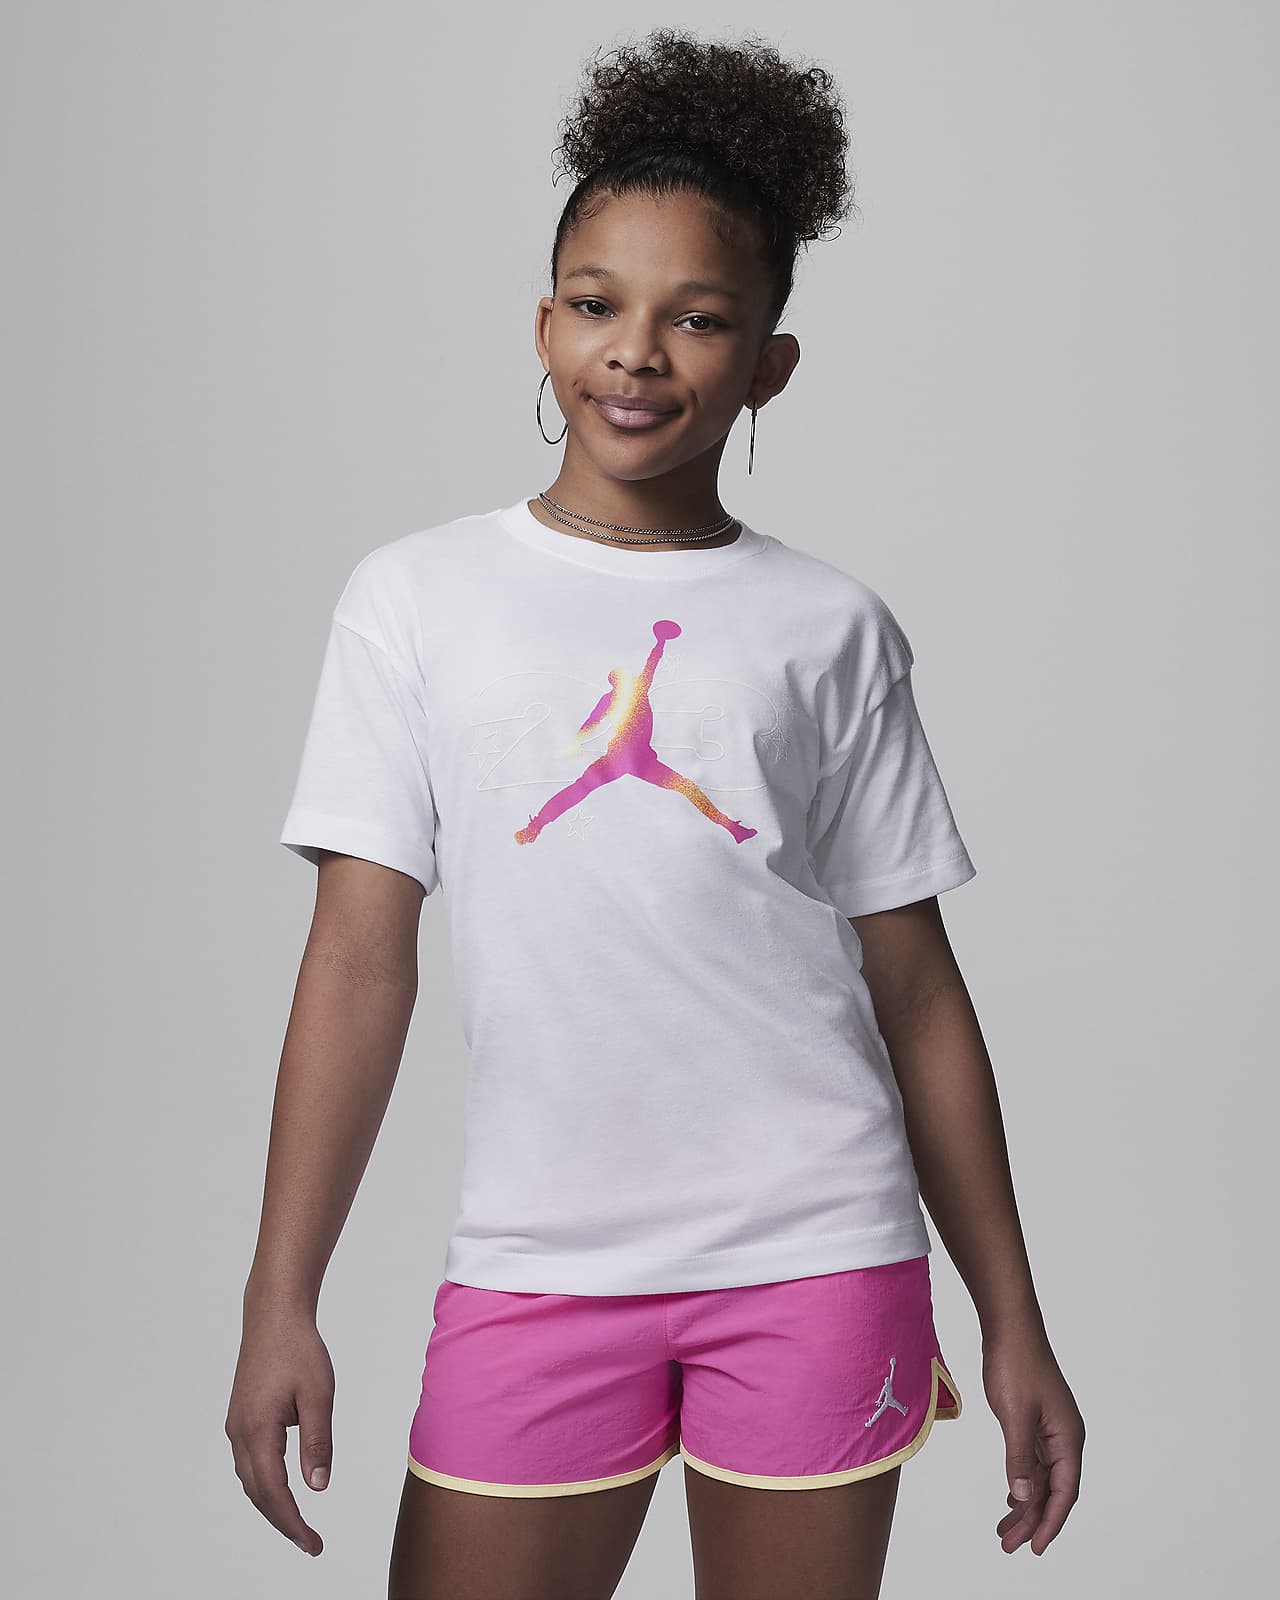 Jordan Lemonade Stand Camiseta con estampado - Niño/a